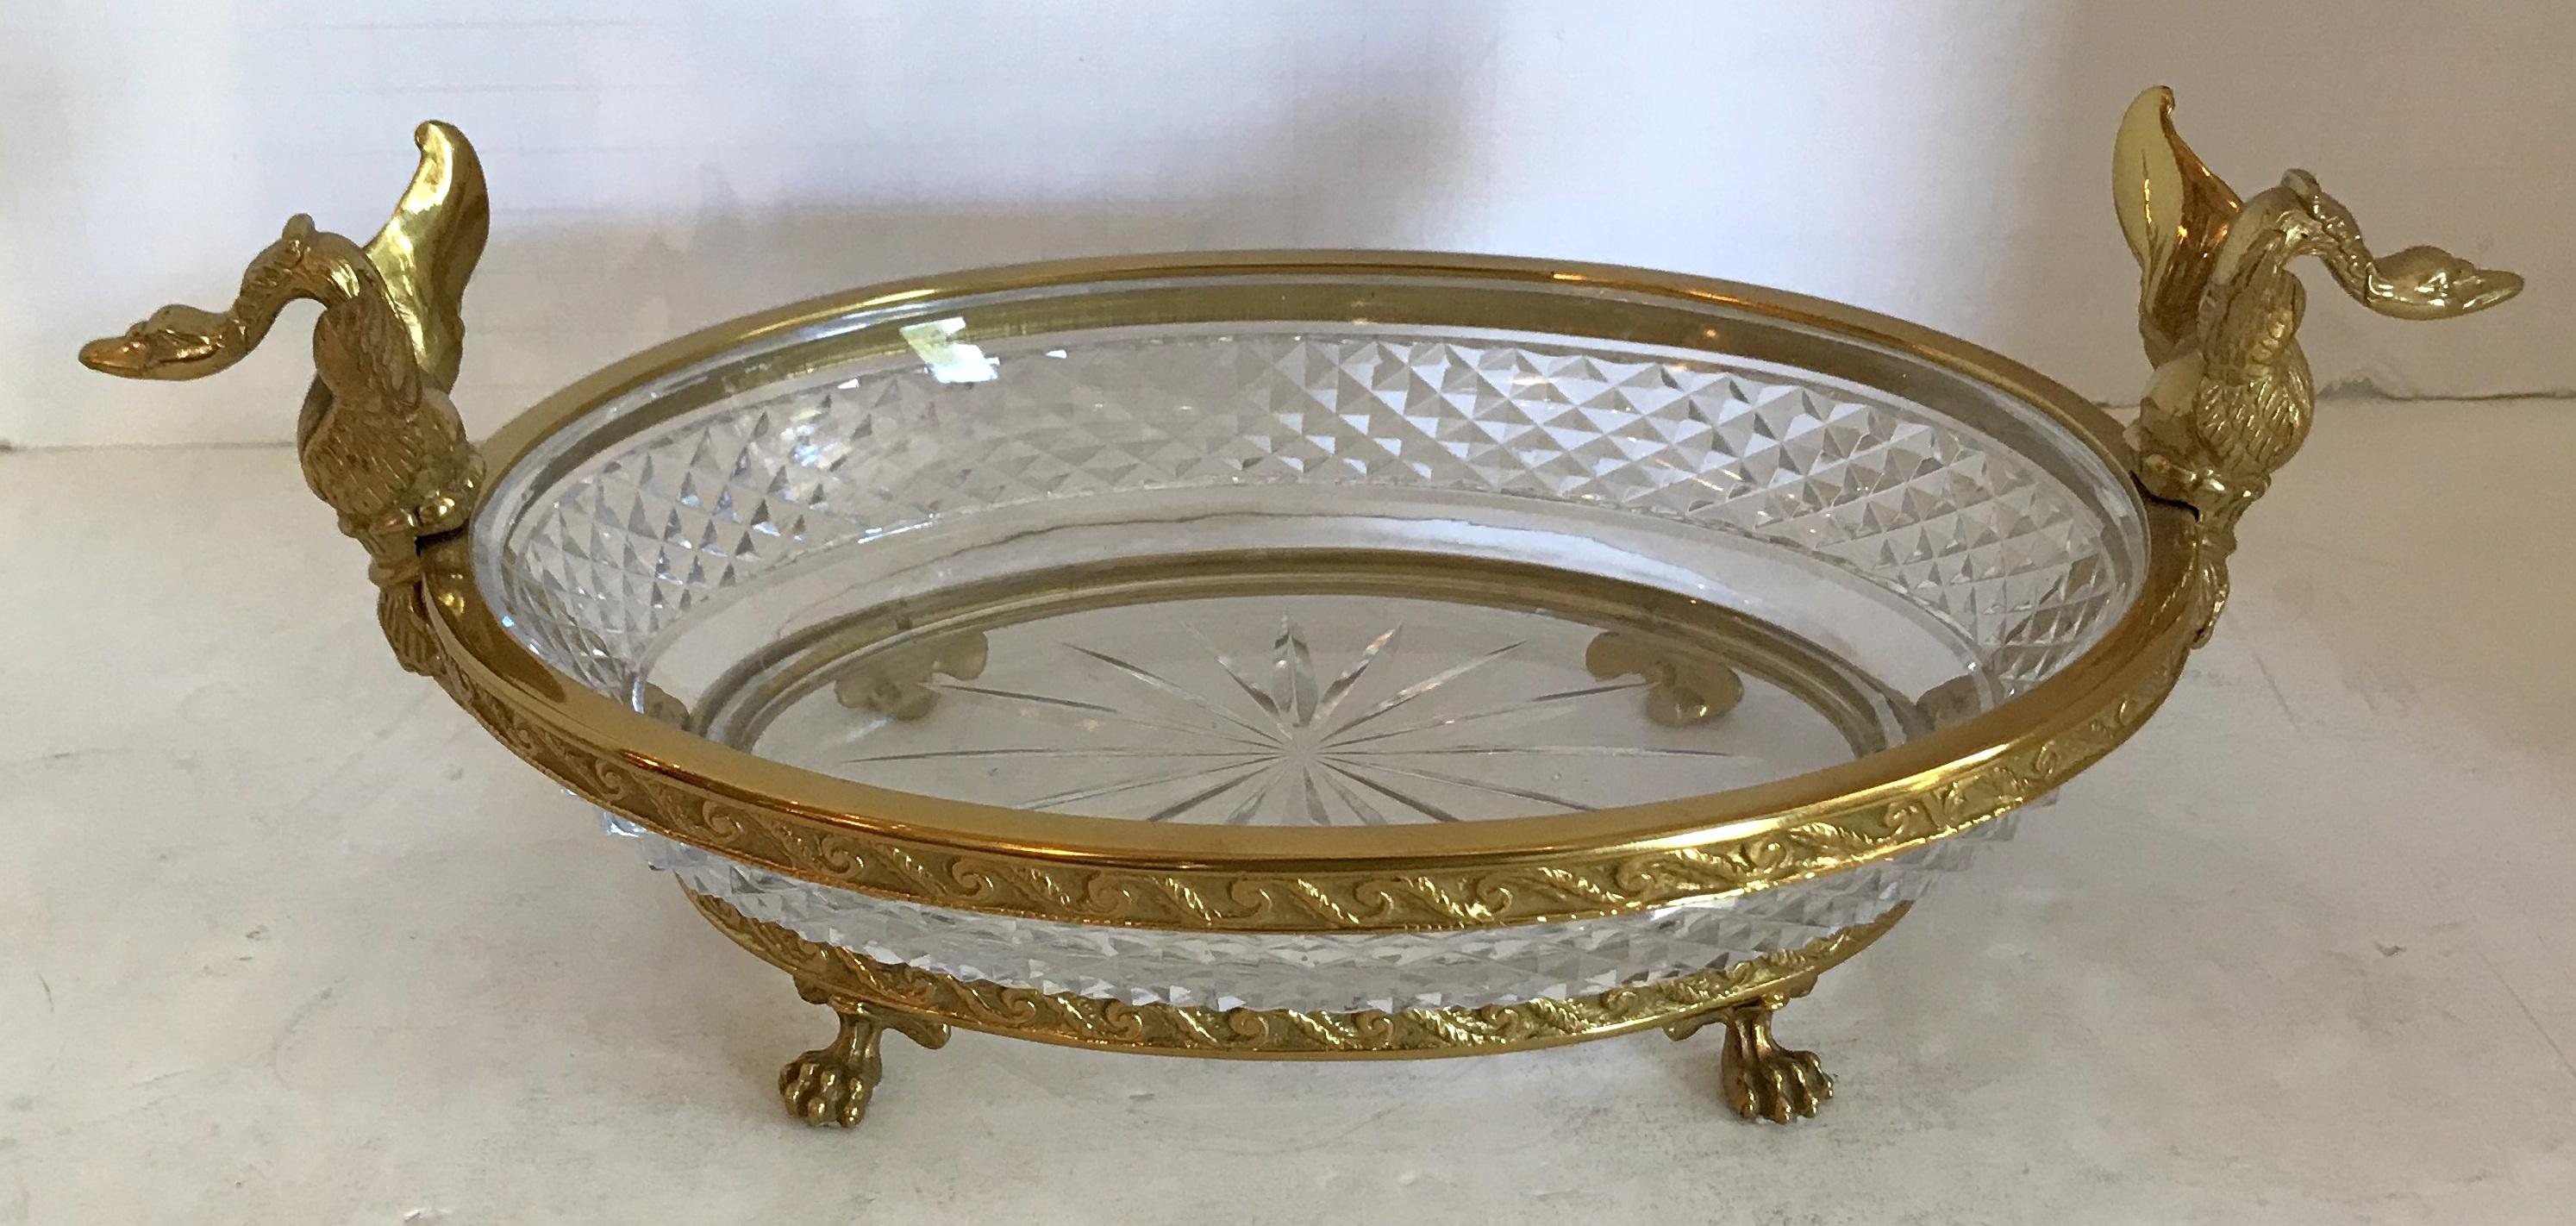 A wonderful French bronze and diamond cut crystal oval centerpiece with swan ormolu handles on paw feet.